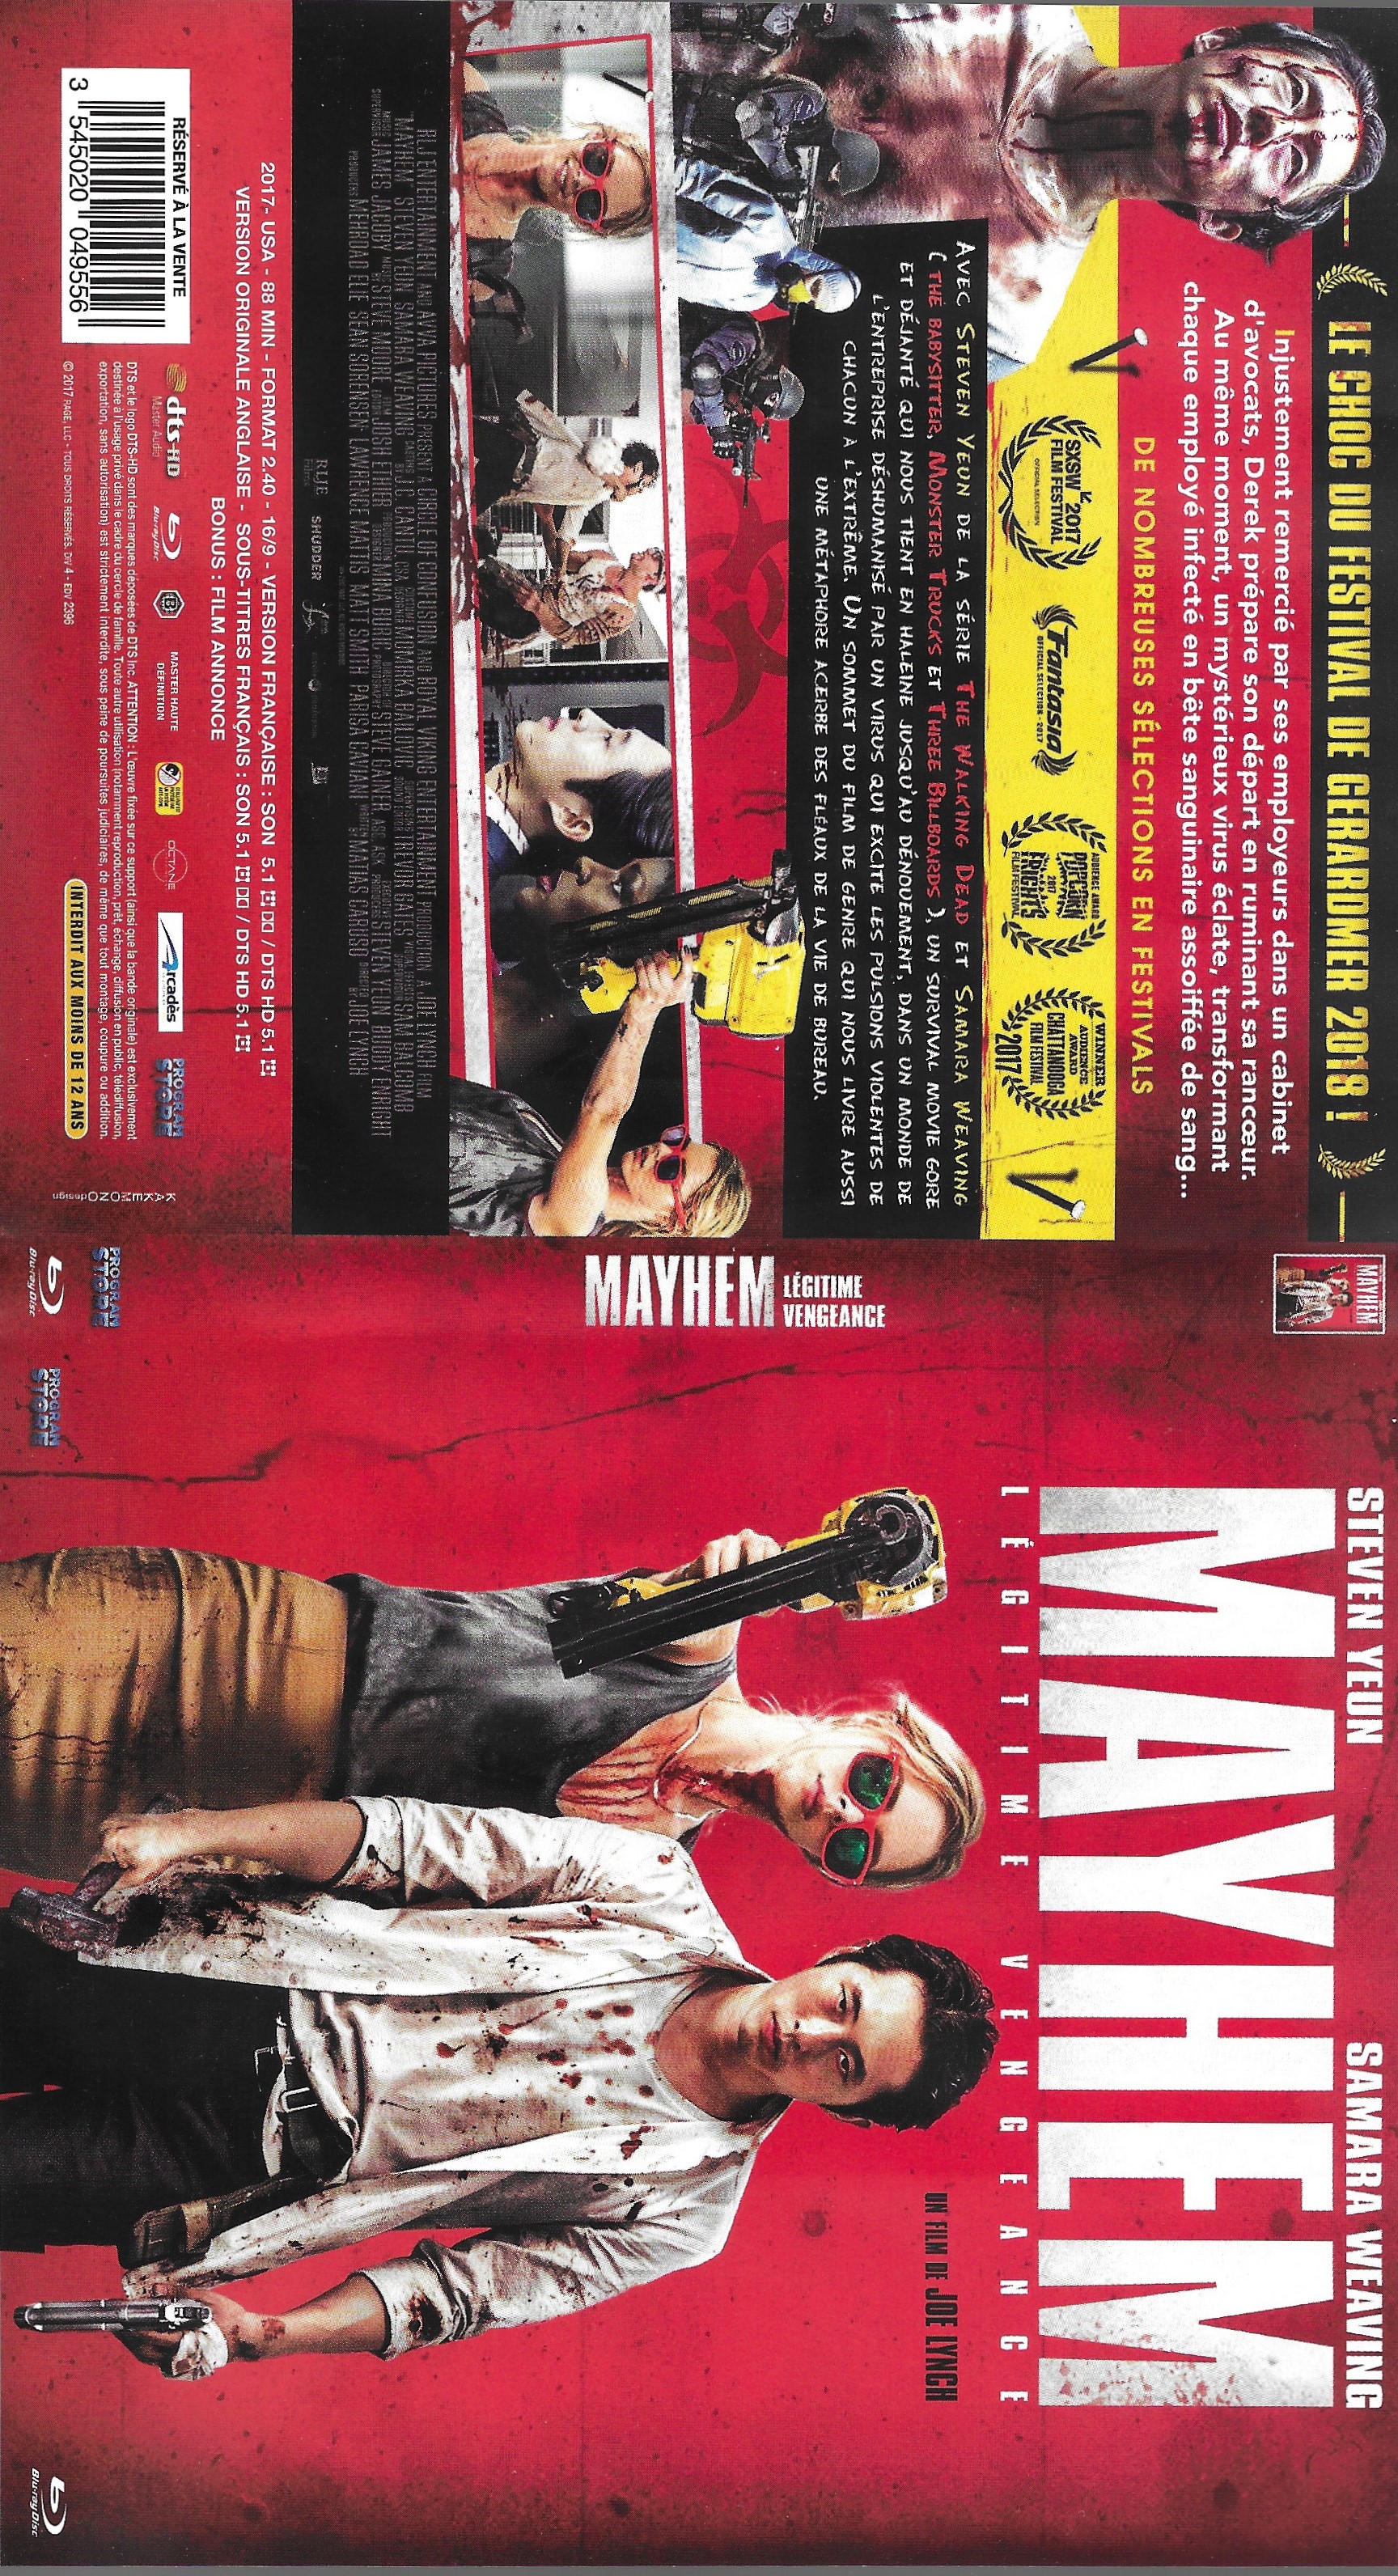 Jaquette DVD Mayhem legitime vengeance (BLU-RAY)